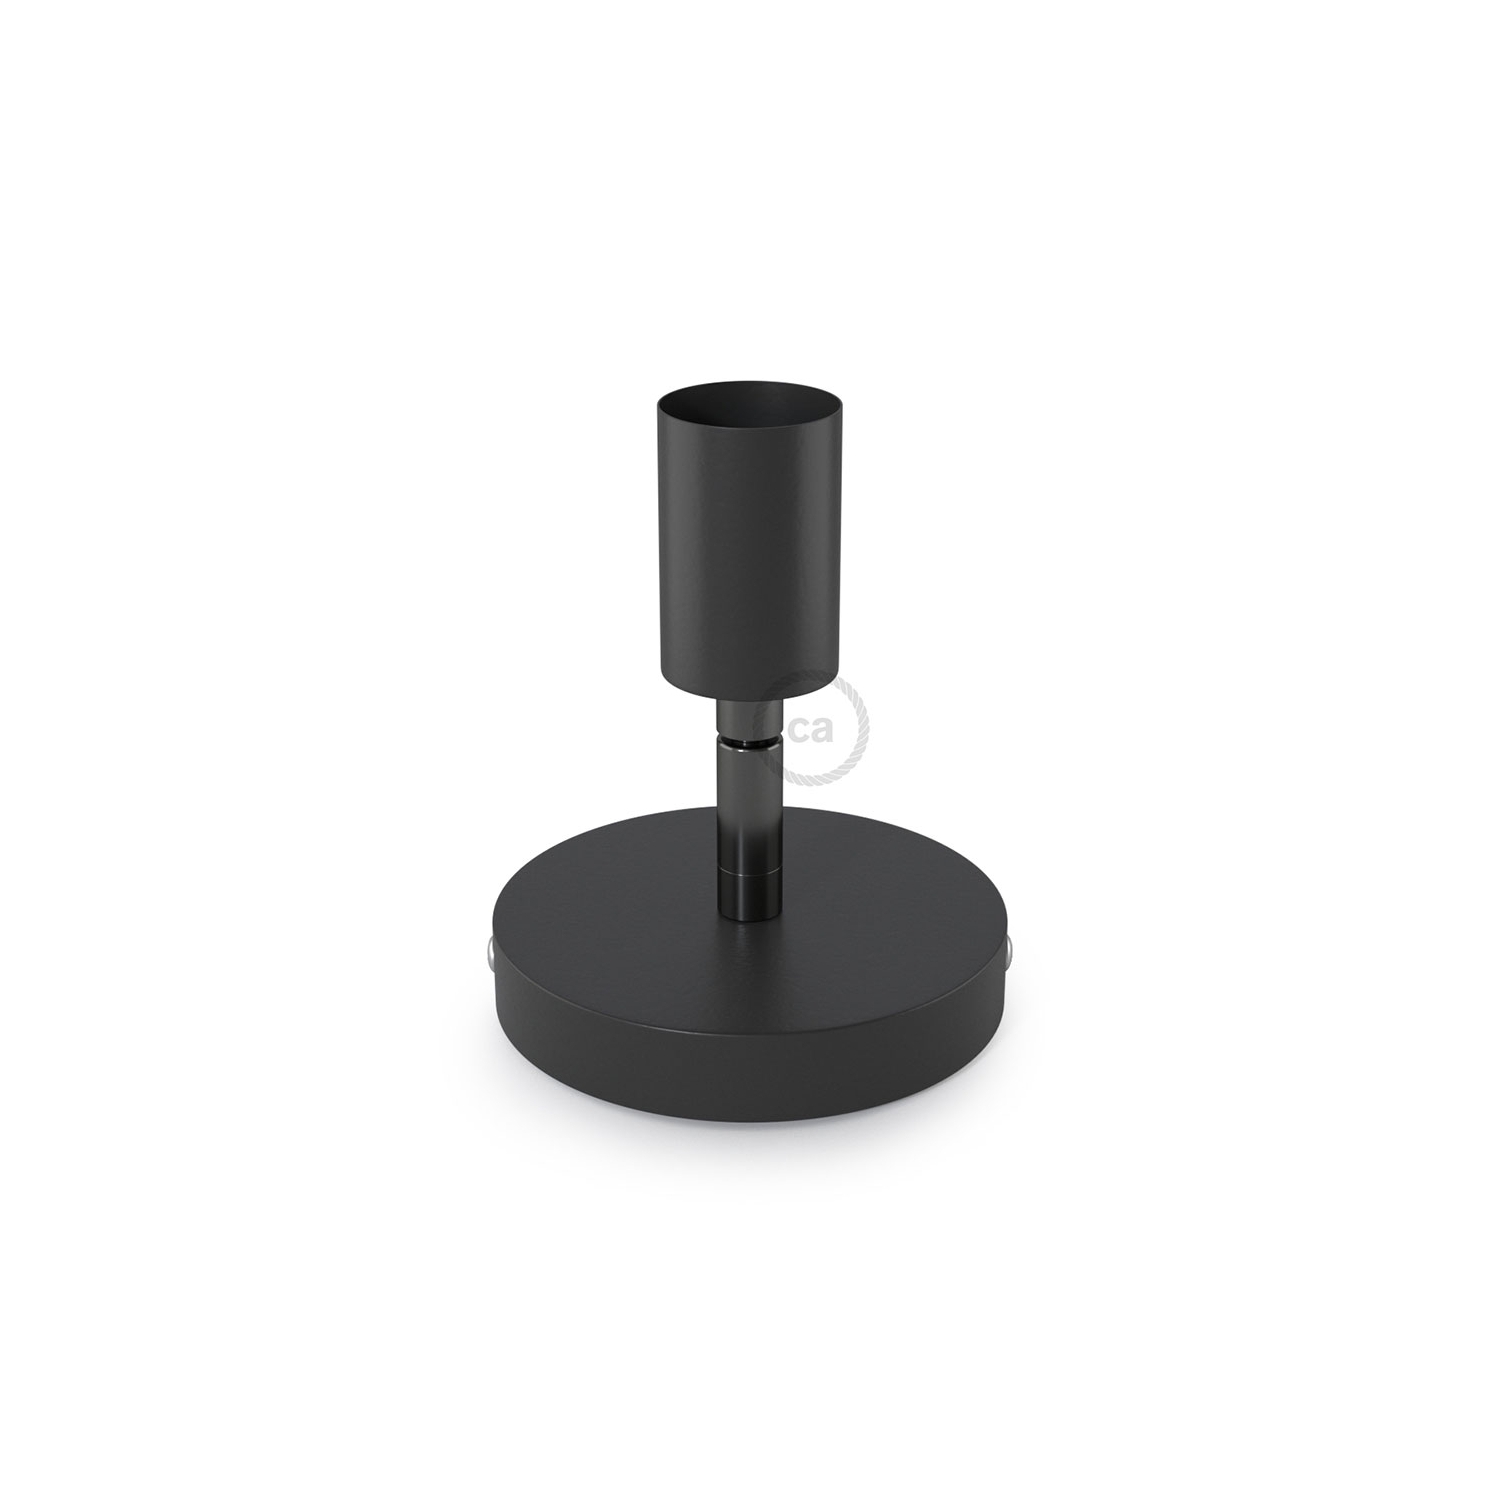 Fermaluce Metallo 90° Black adjustable, metal wall flush light